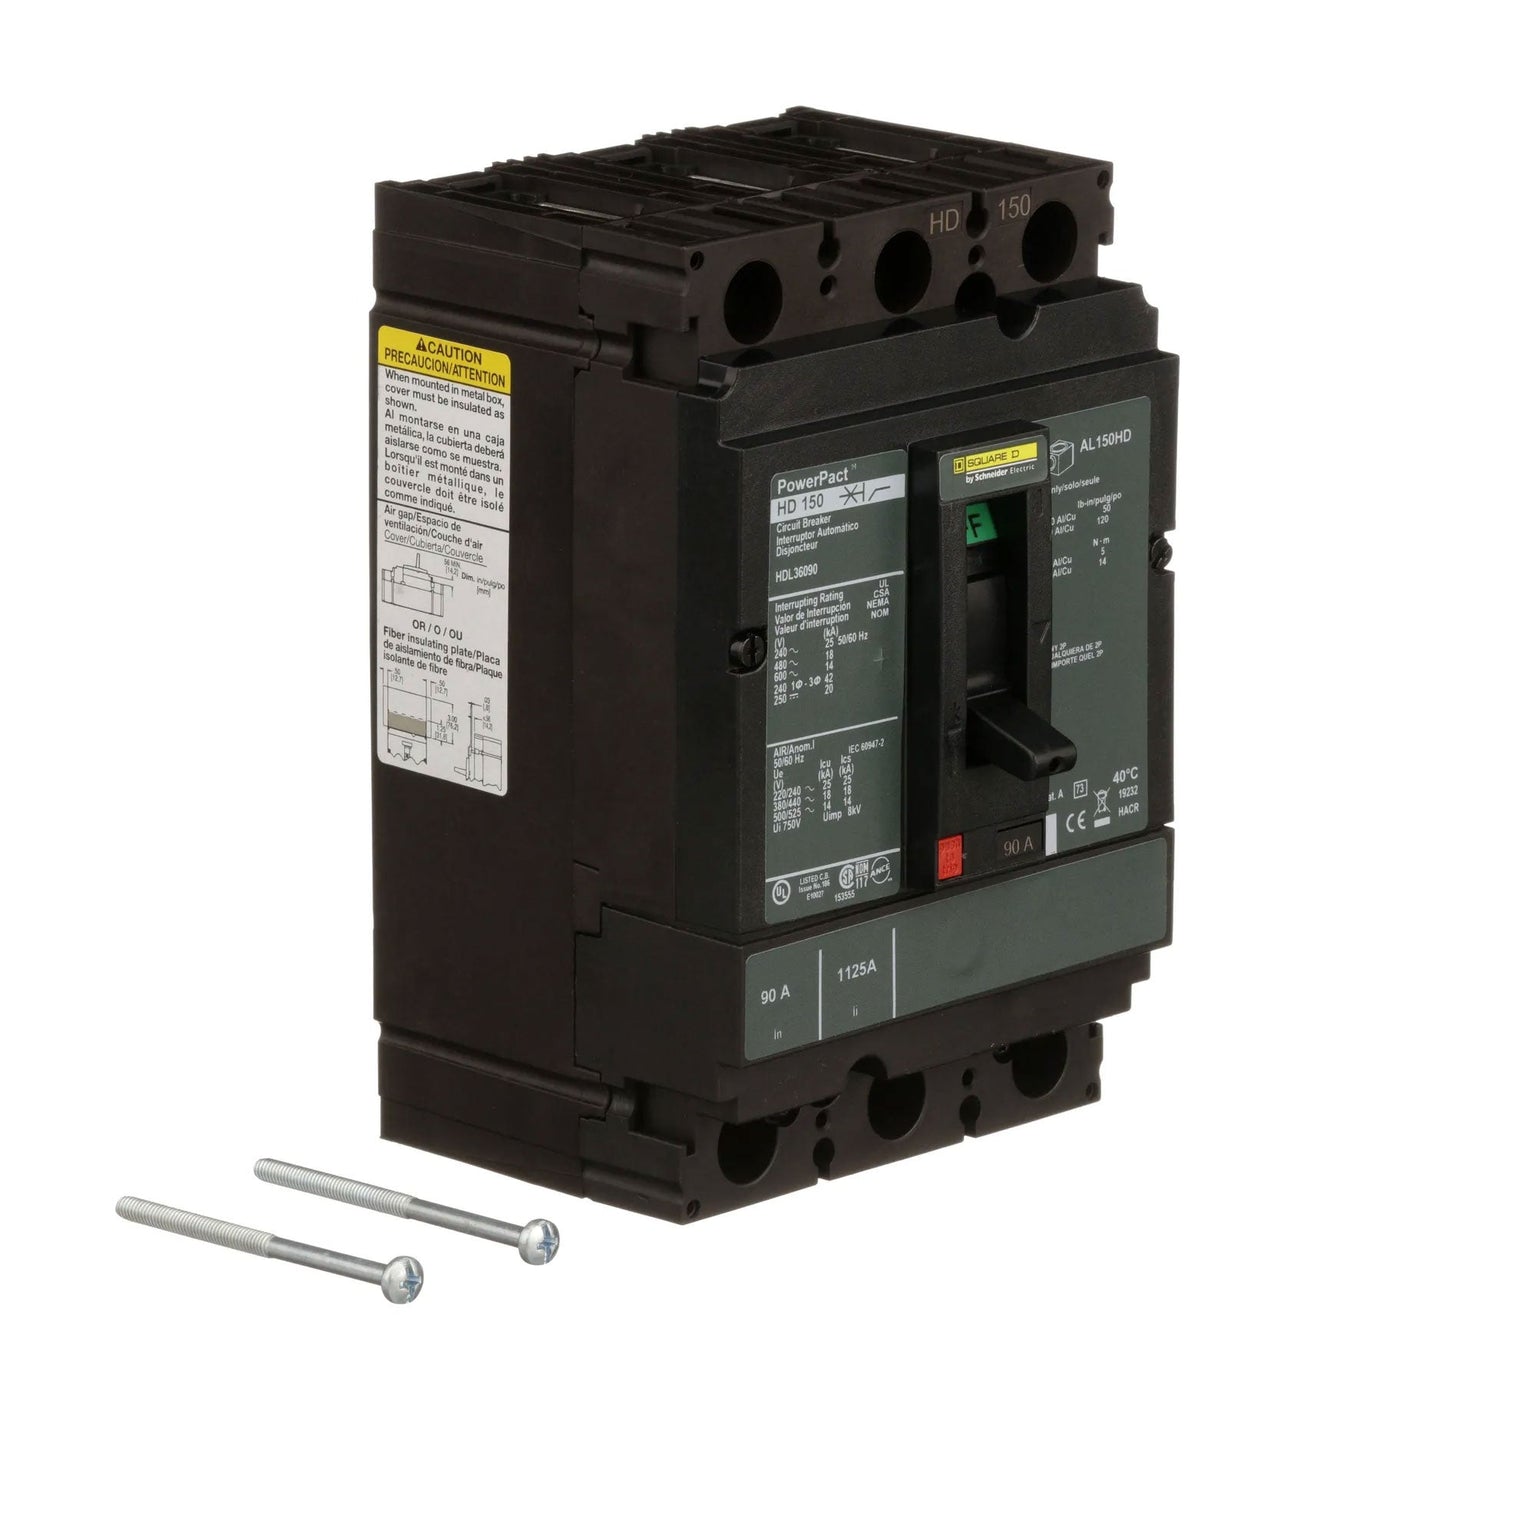 HDL36090 - Square D - Molded Case Circuit Breaker